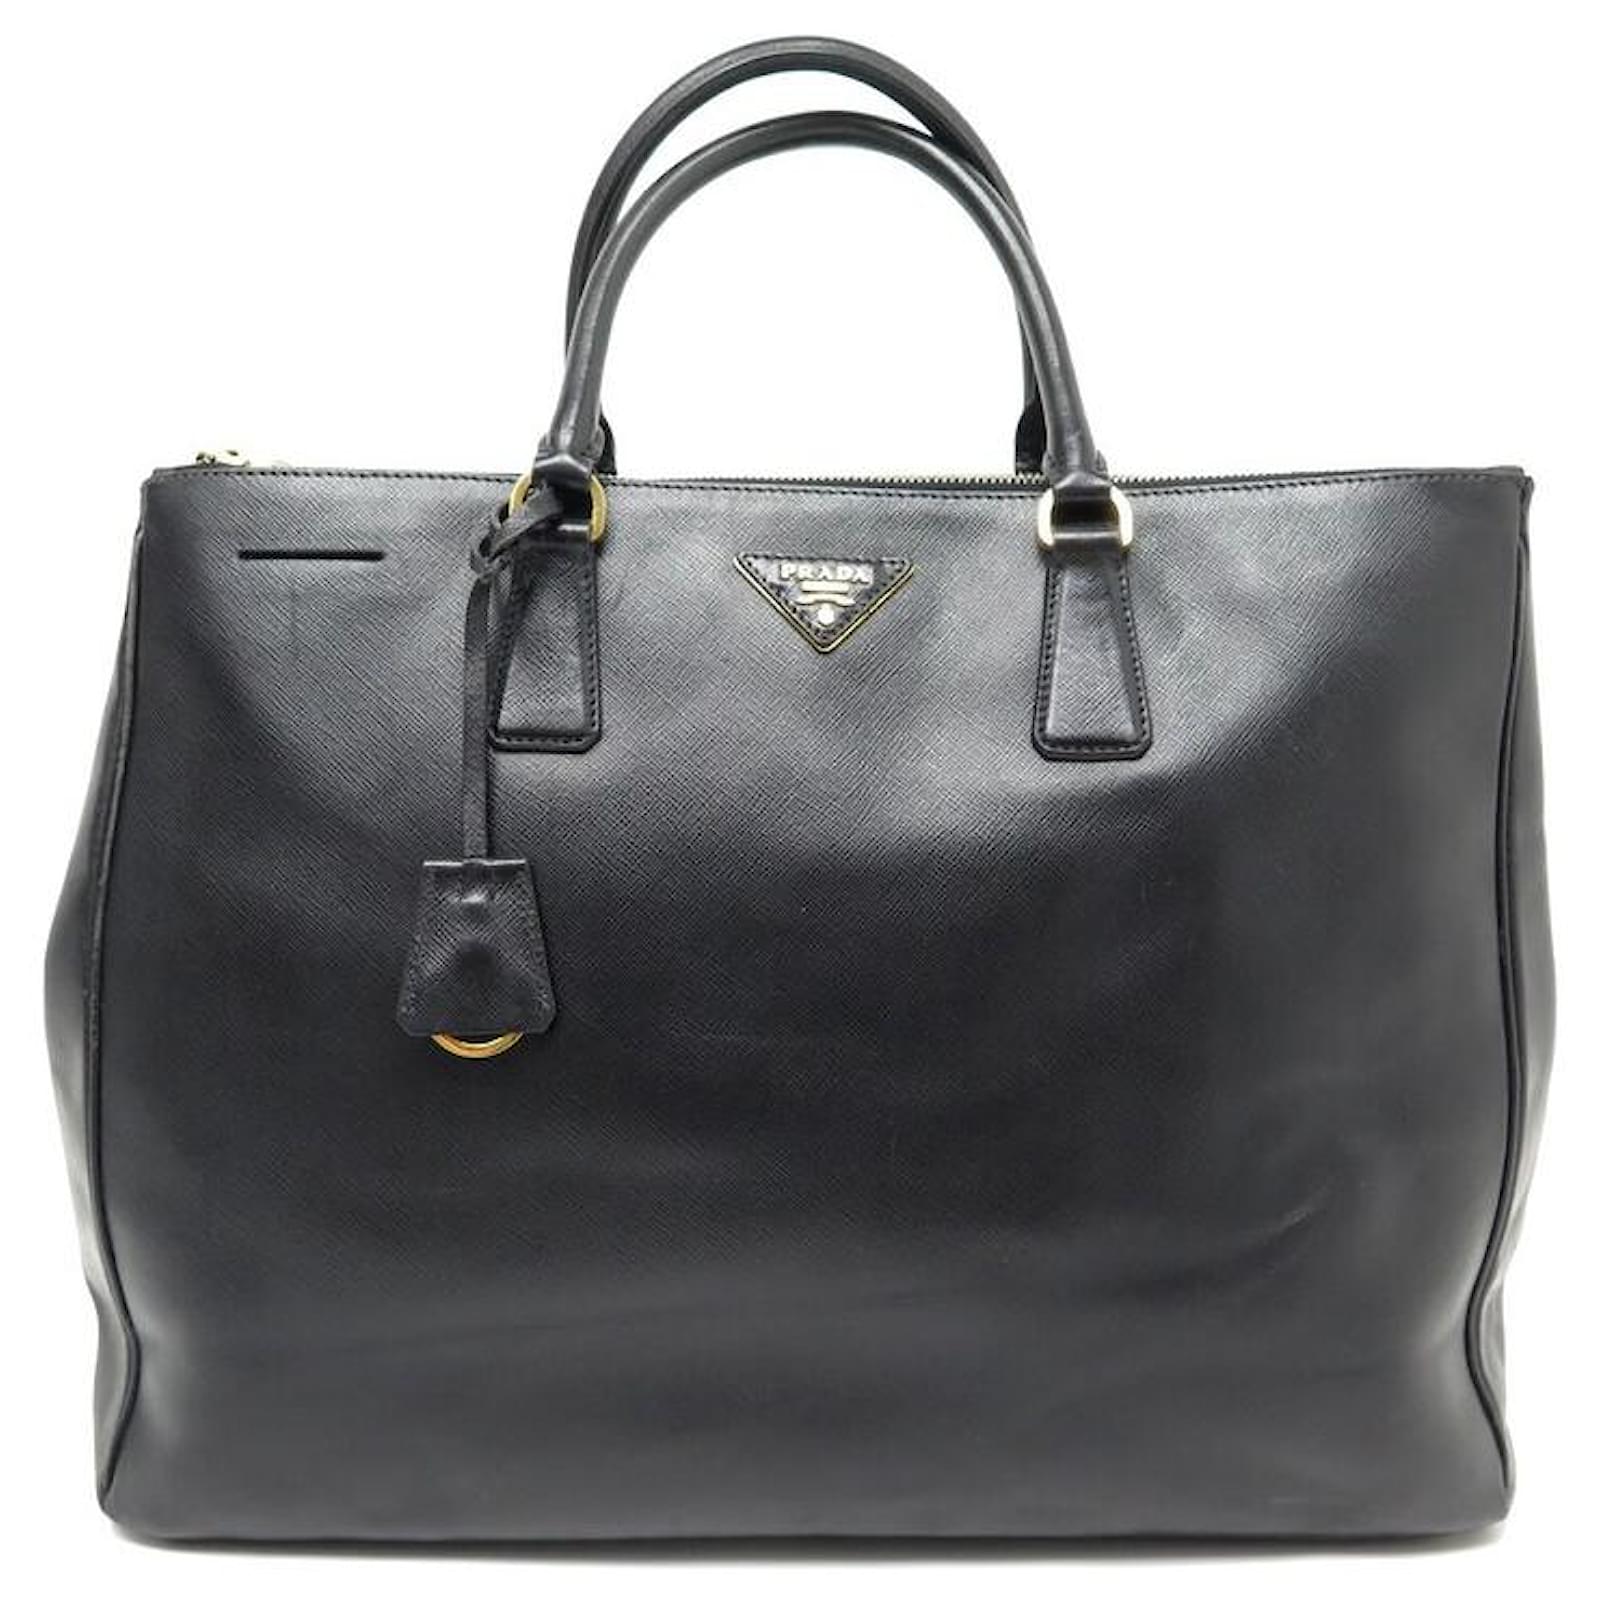 Prada, Bags, New Prada Galleria Saffiano Leather Large Bag New